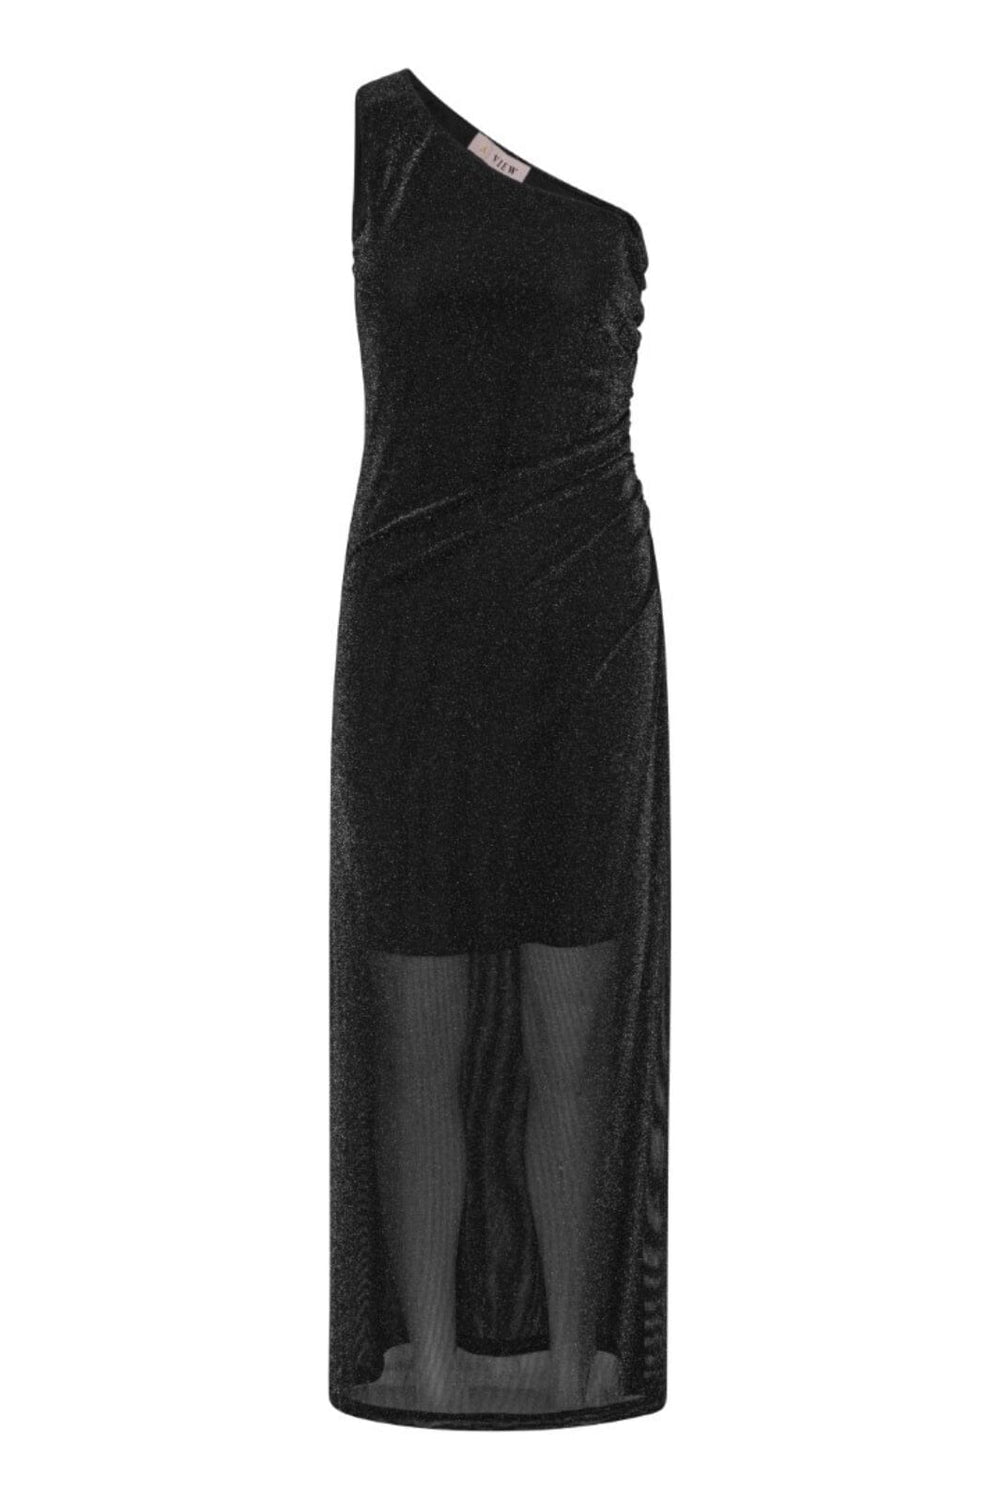 A-VIEW - Passion Dress - 999 Black Kjoler 